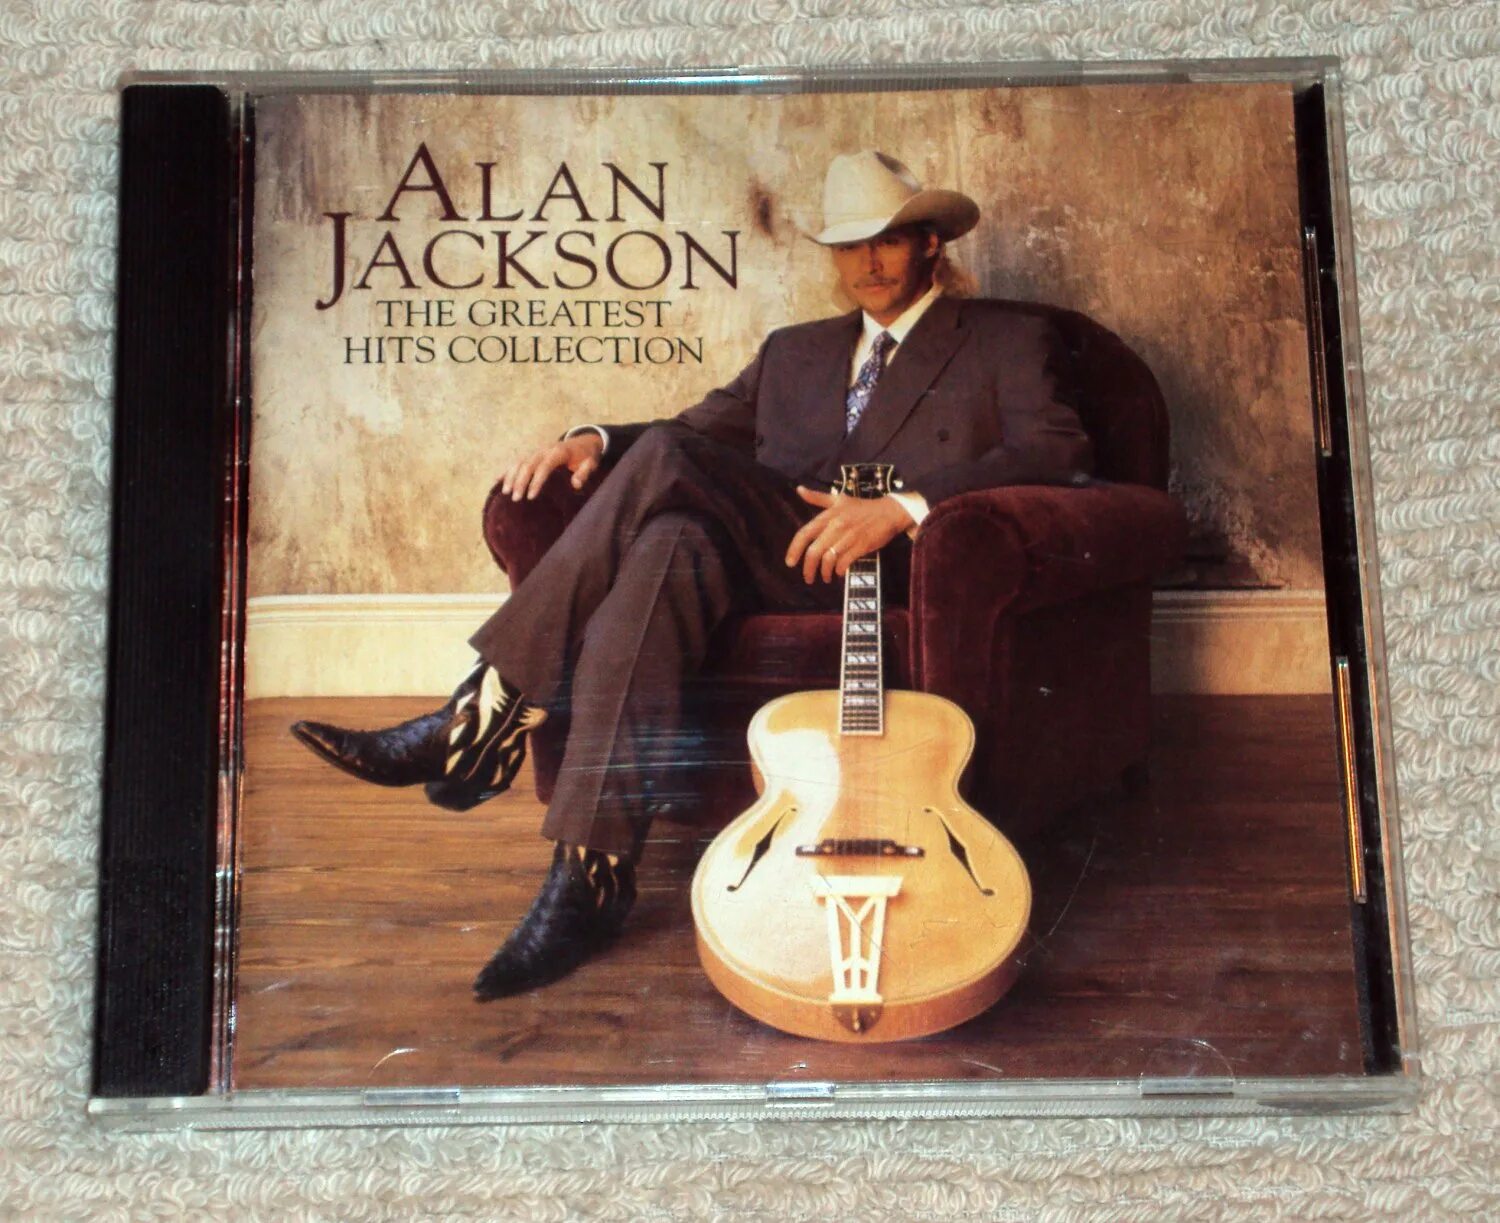 Alan Jackson album. Brent Mason album zip. Alan Jackson in daughters' Weddings. Greatest hits collection